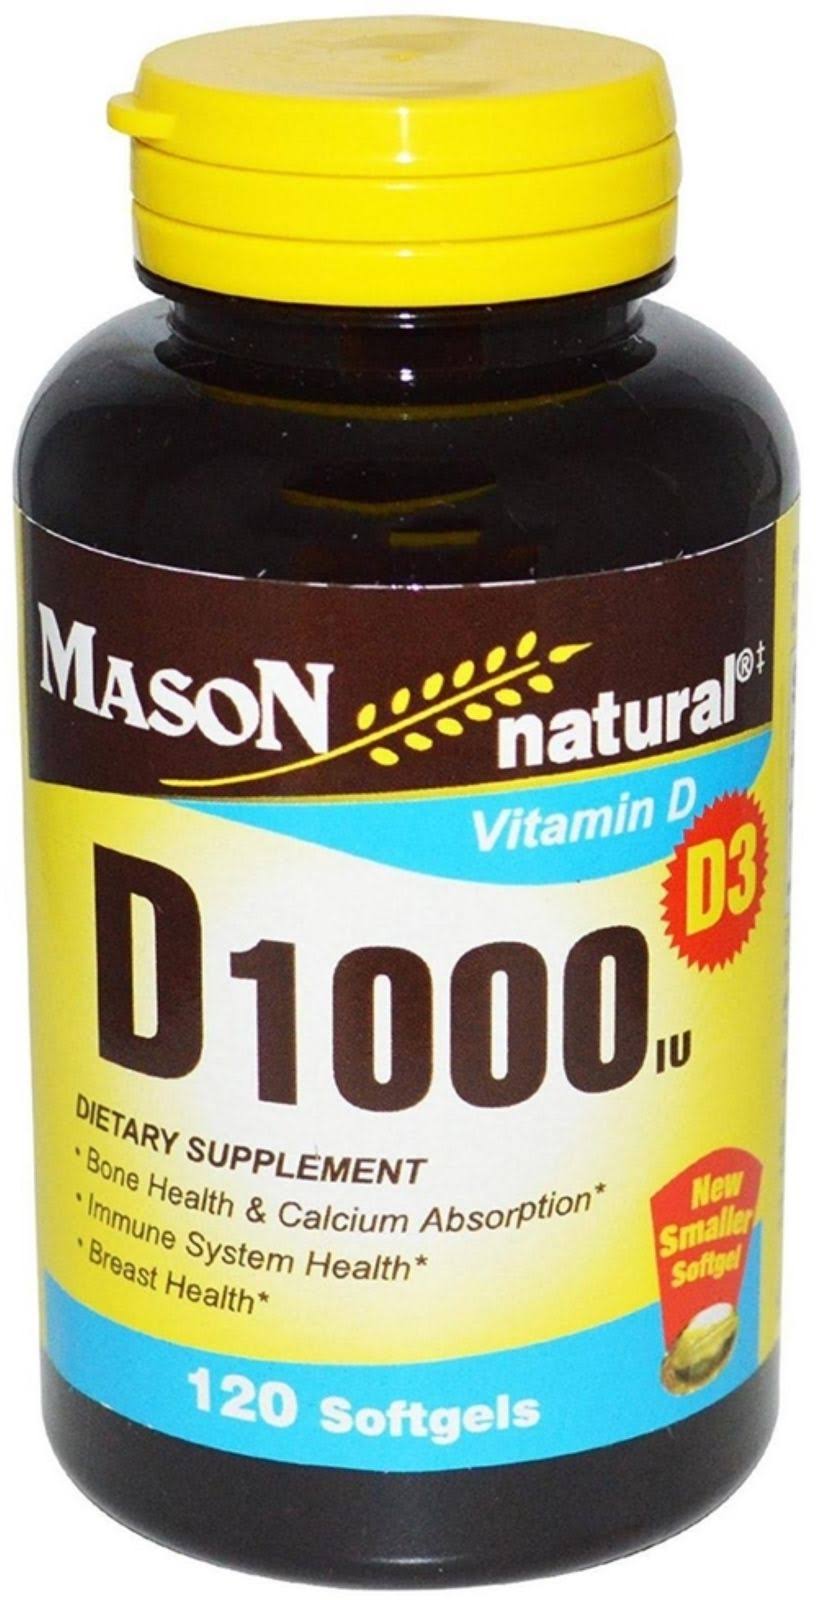 Mason Natural Vitamin D3 Dietary Supplement - 1000 IU, 120 Softgels